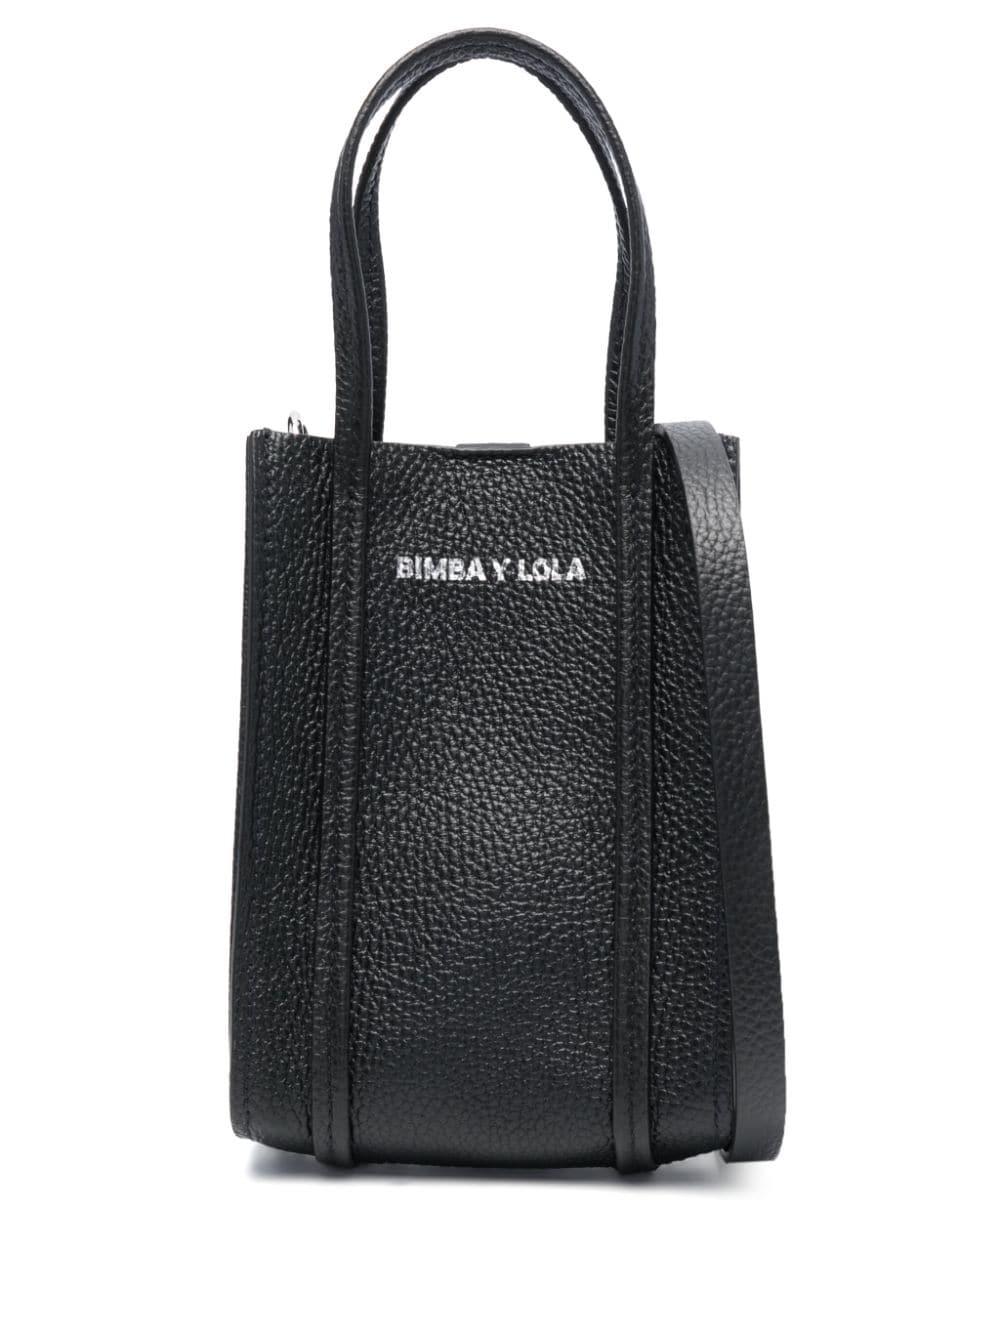 Bimba Y Lola Cross-body Bag in Gray